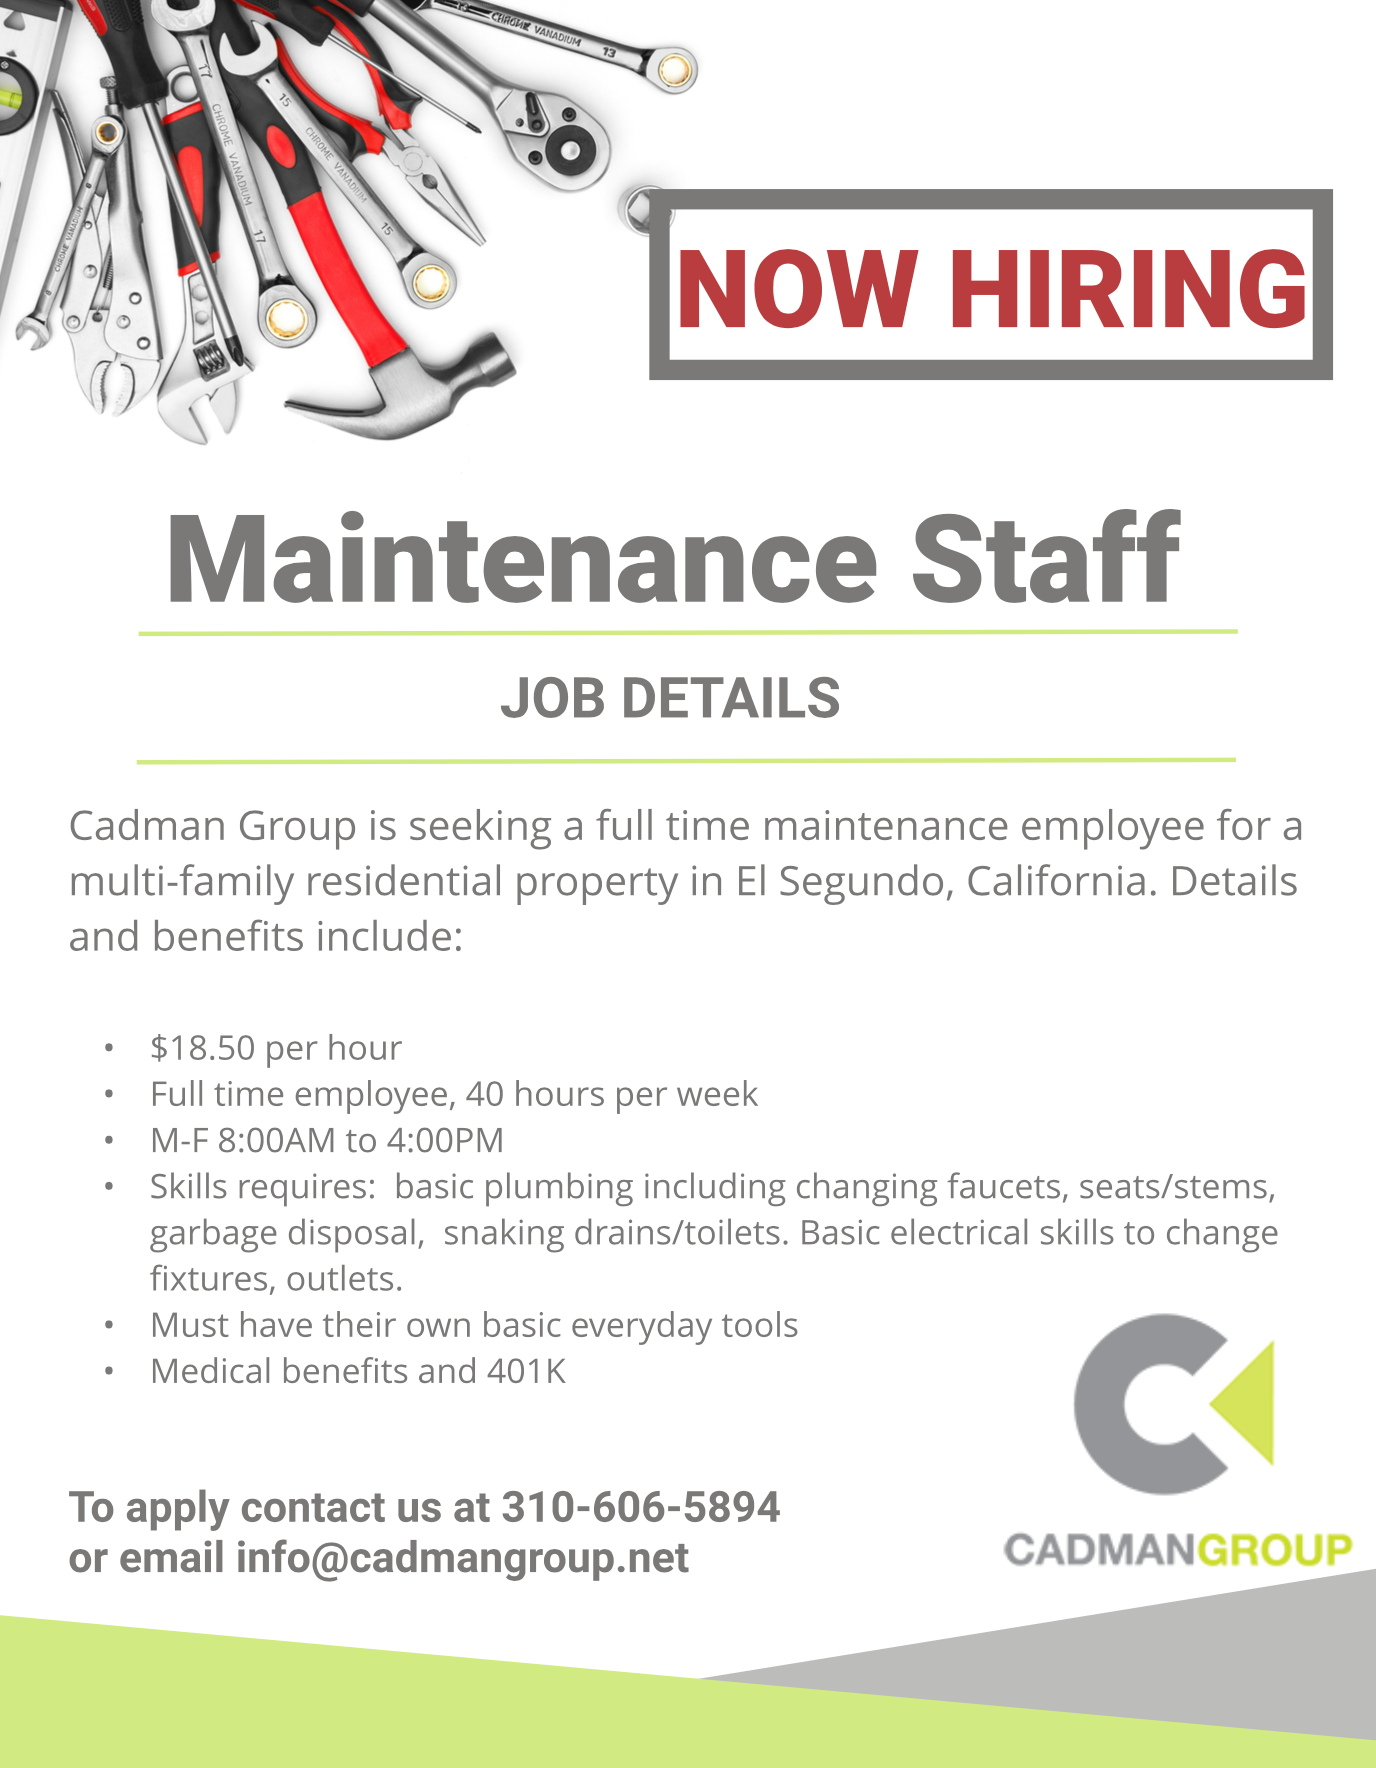 Now hiring maintenance staff